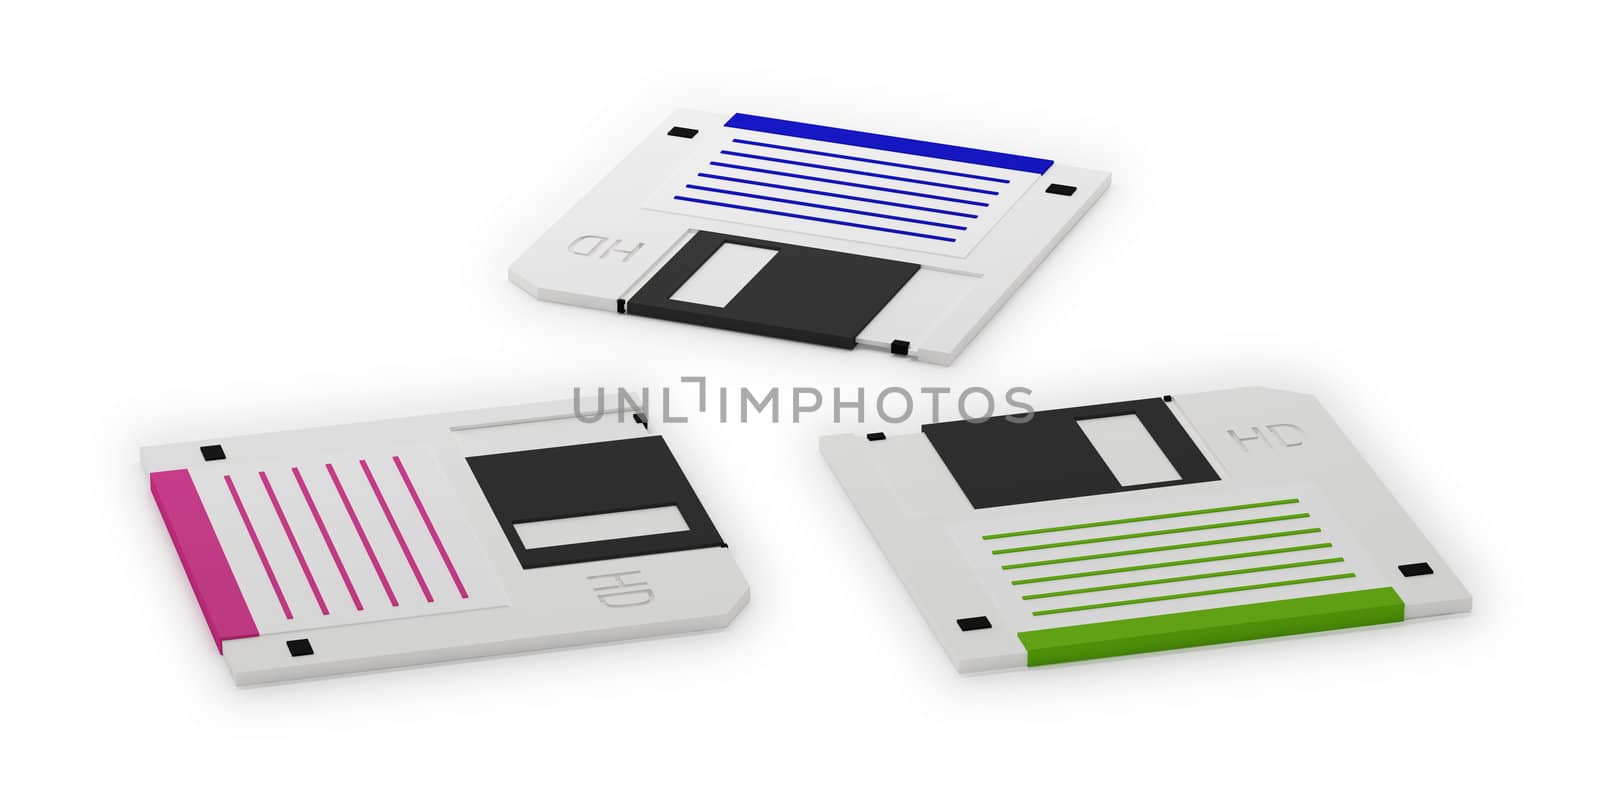 Floppy Diskette. by Shmer